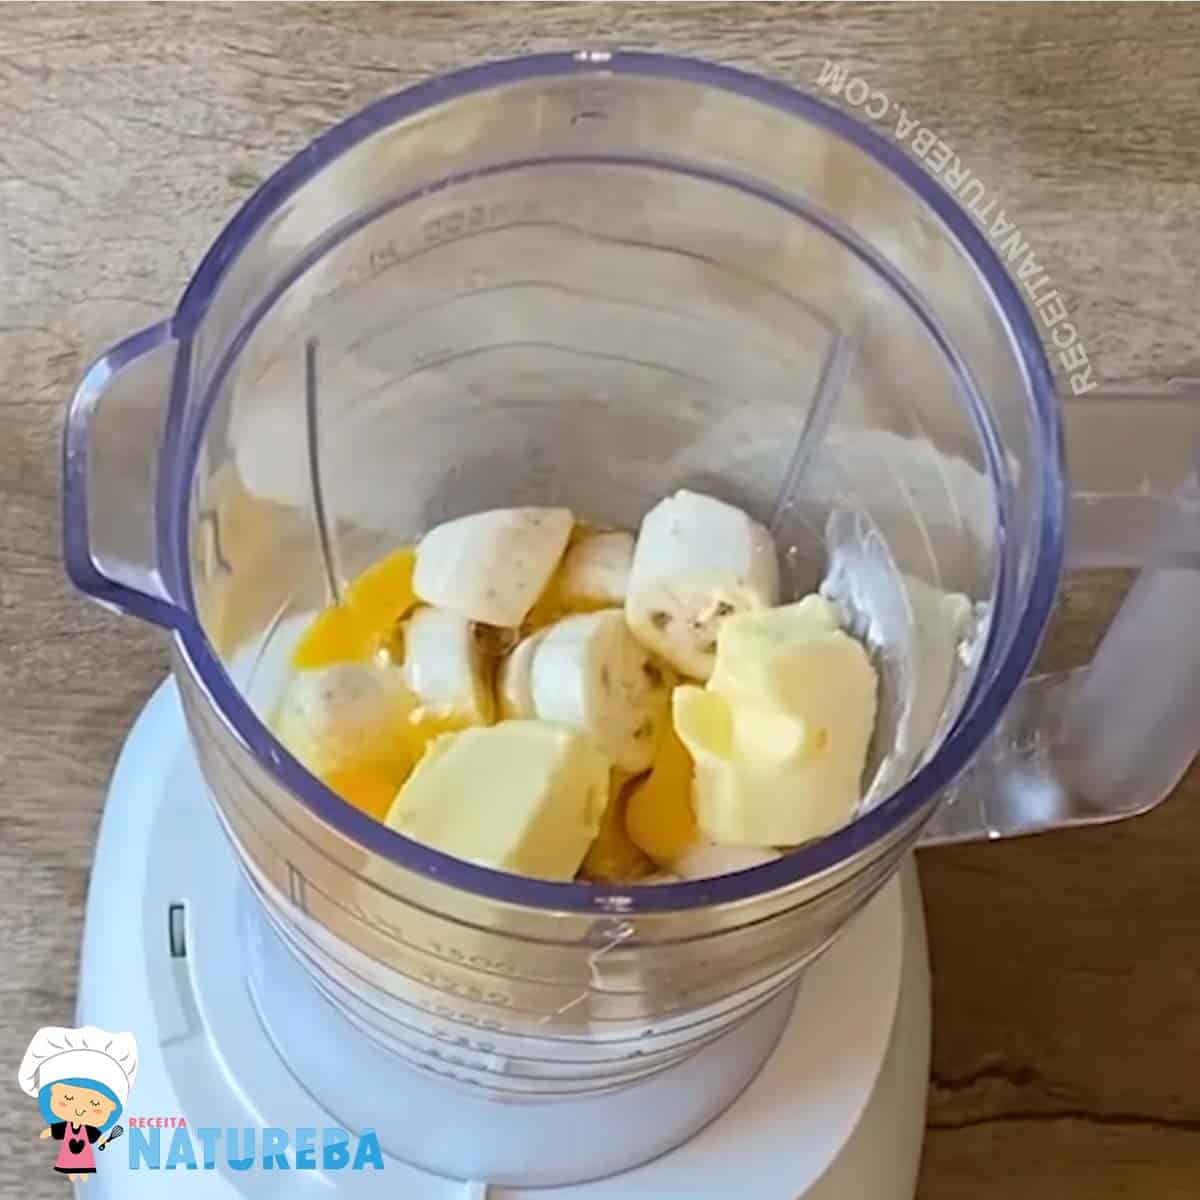 batendo banana ovos e manteiga